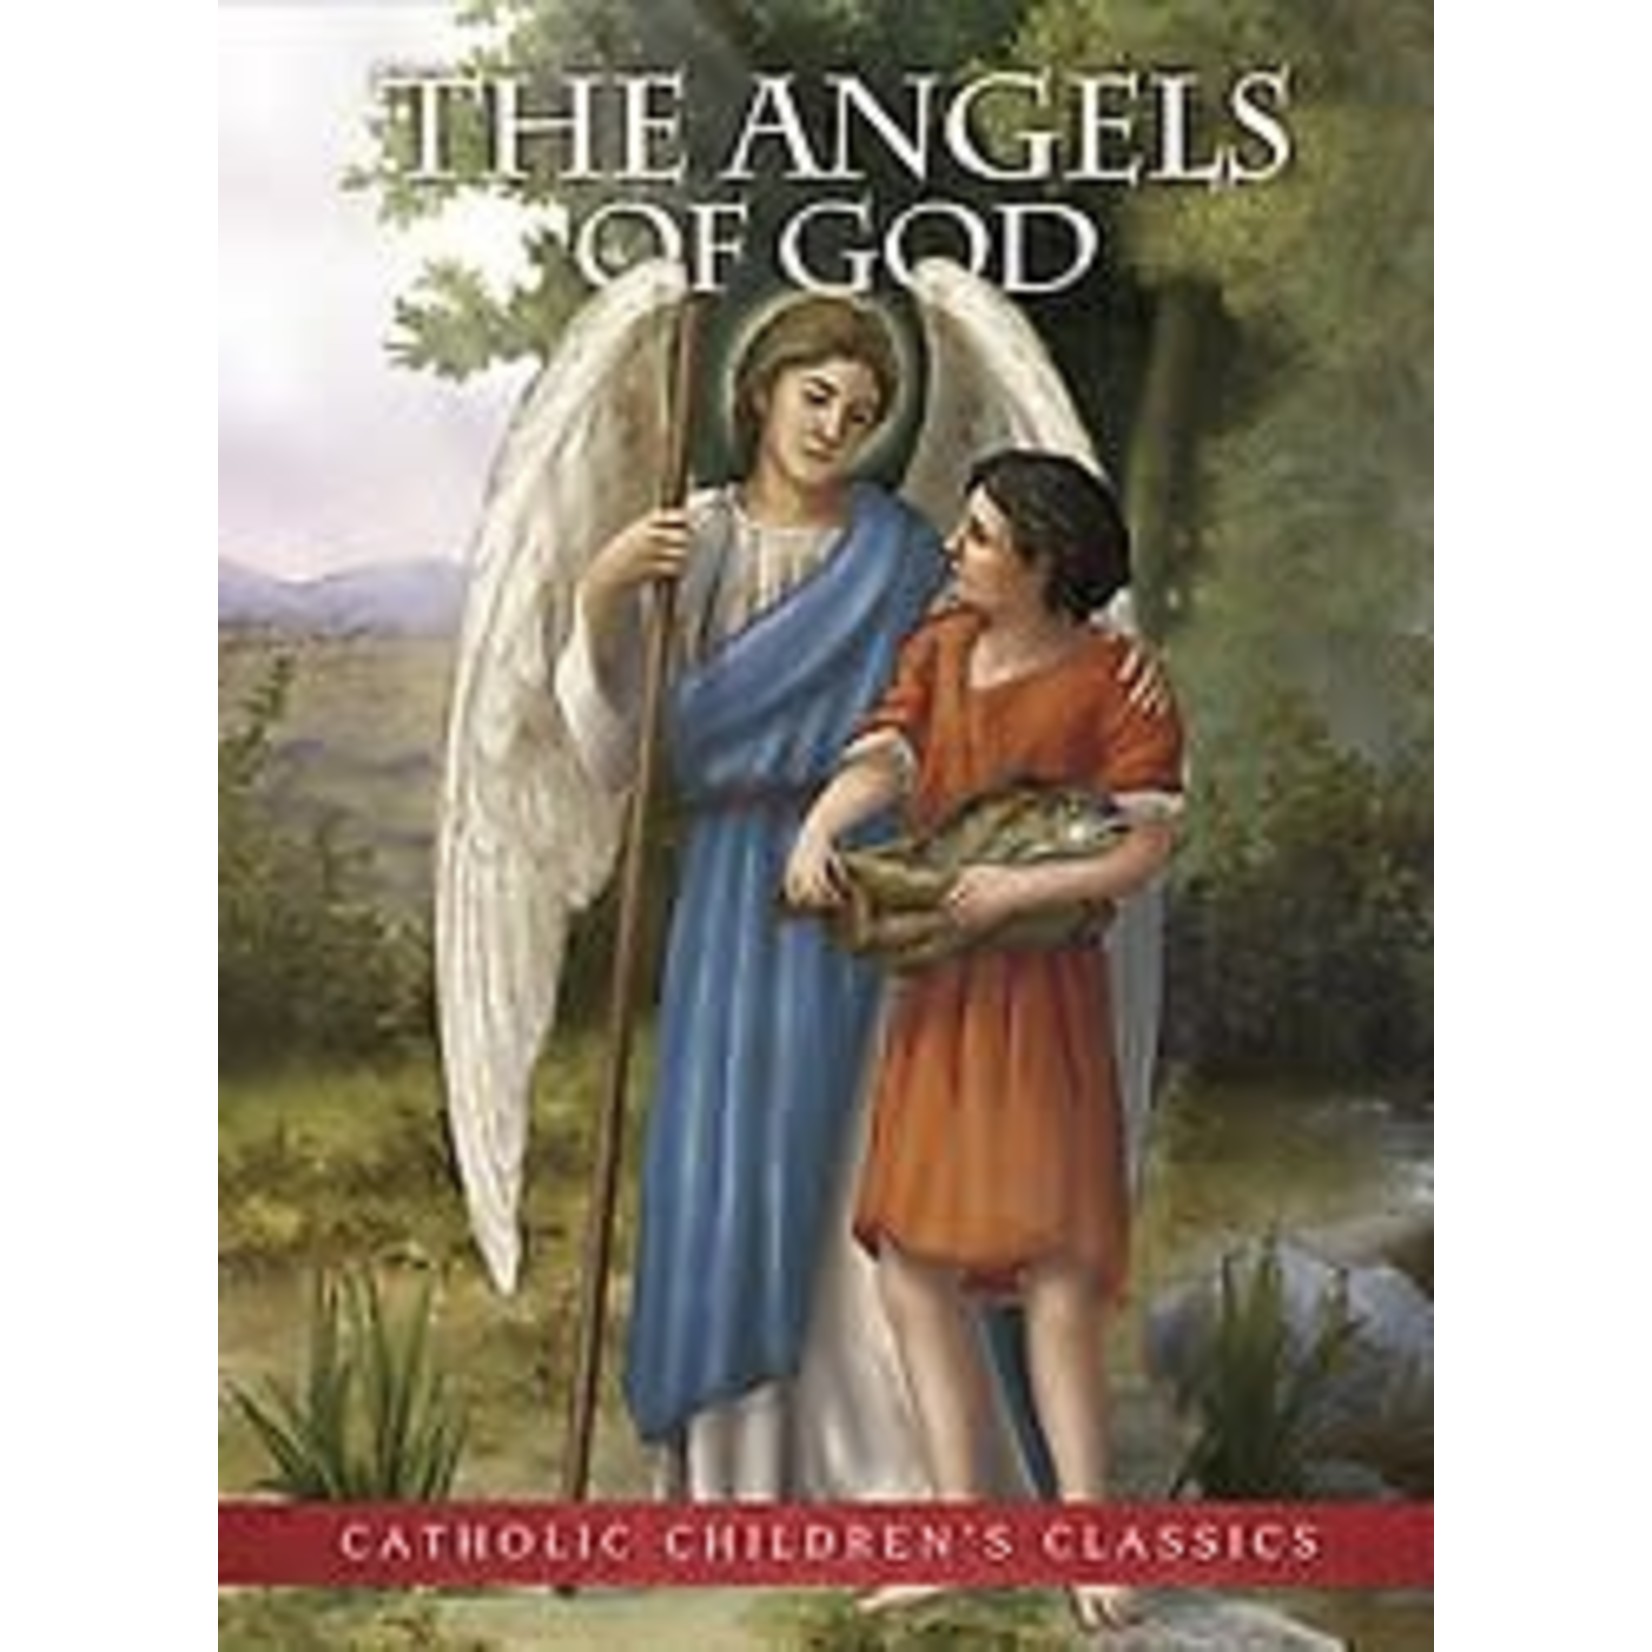 The Angels of God Catholic Children's Classic